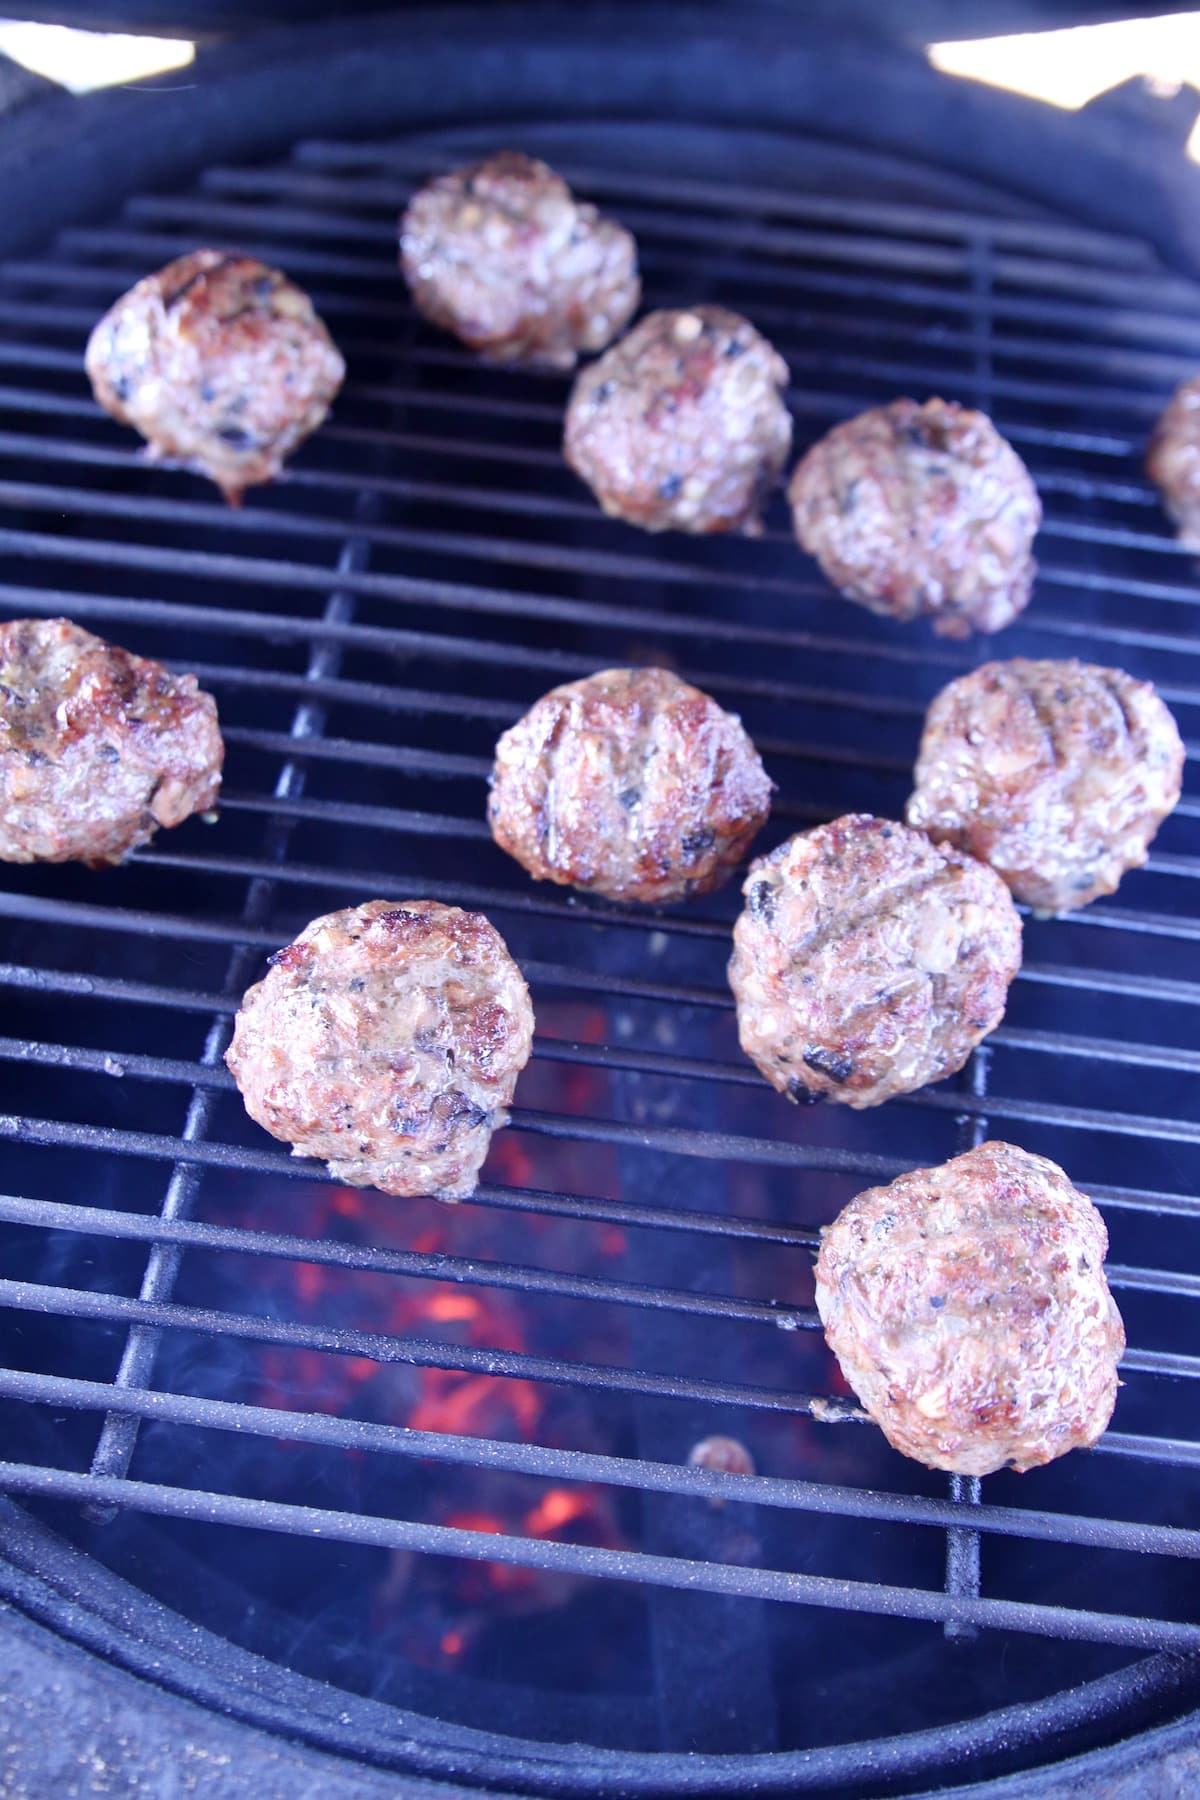 Grilling meatballs.